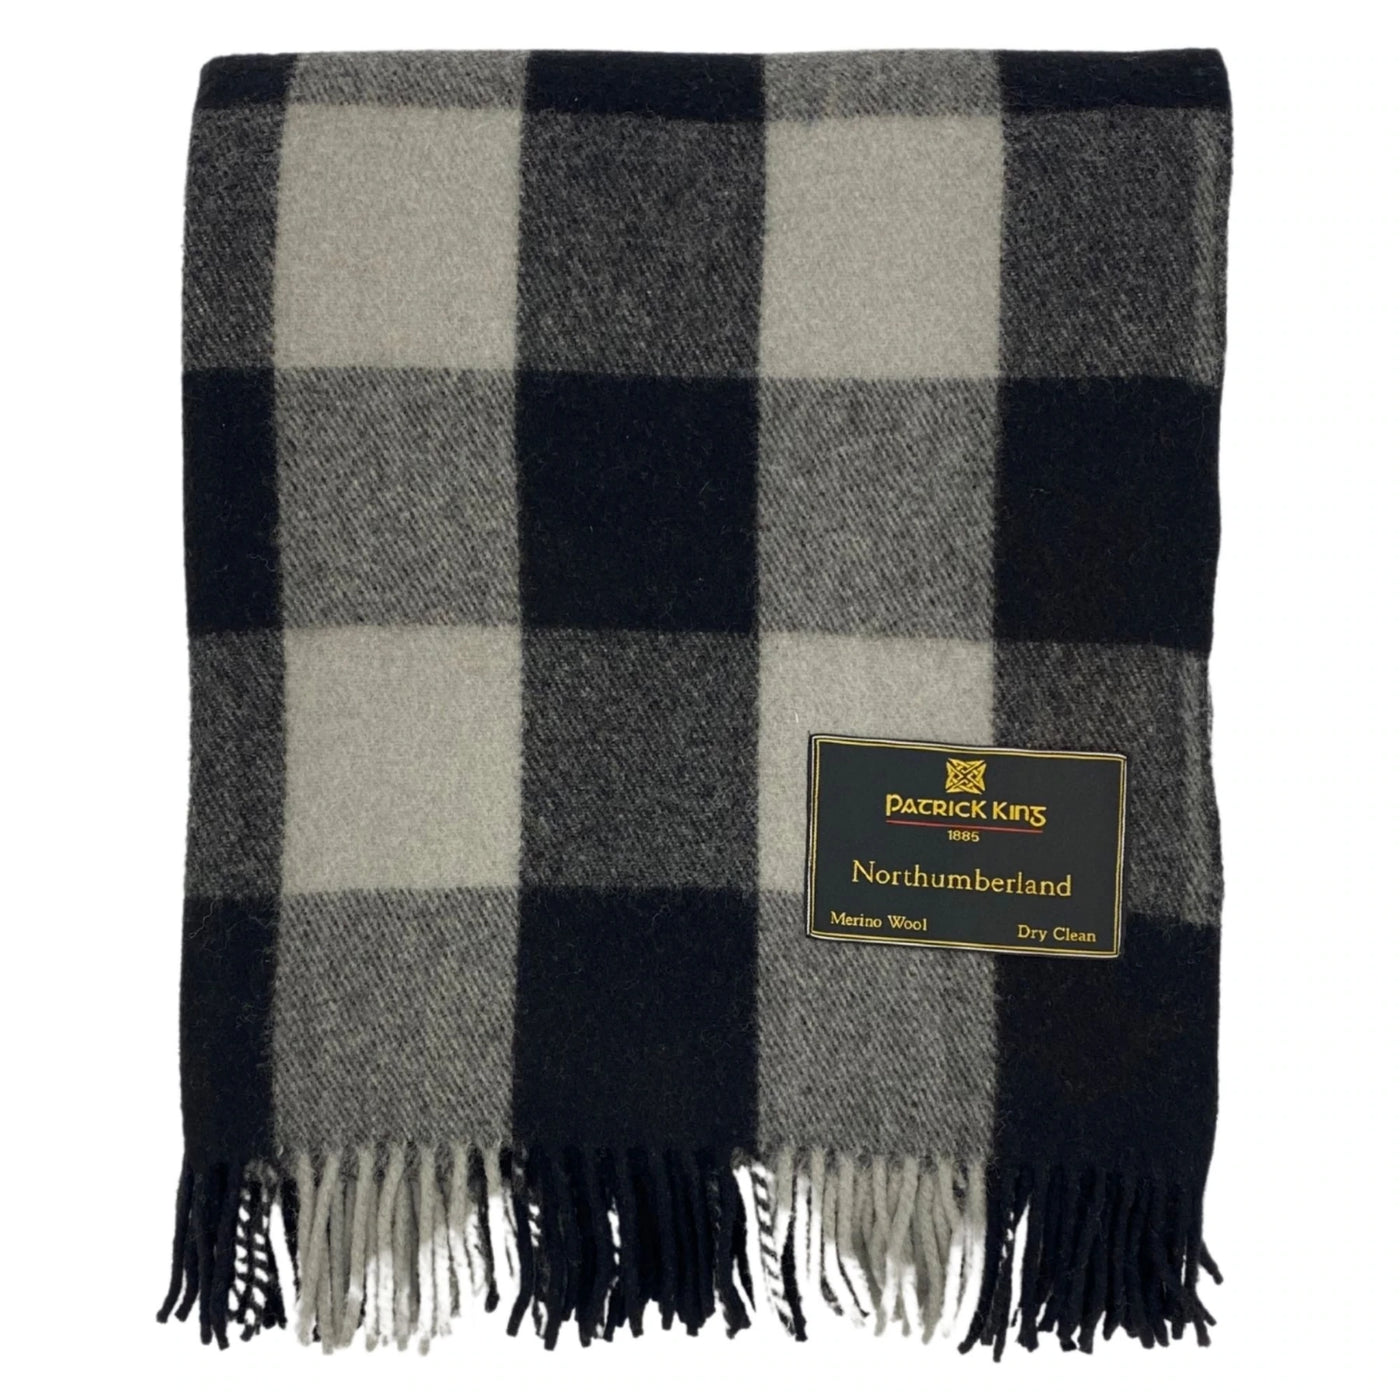 Patrick King Northumberland Merino Wool Lap Blanket